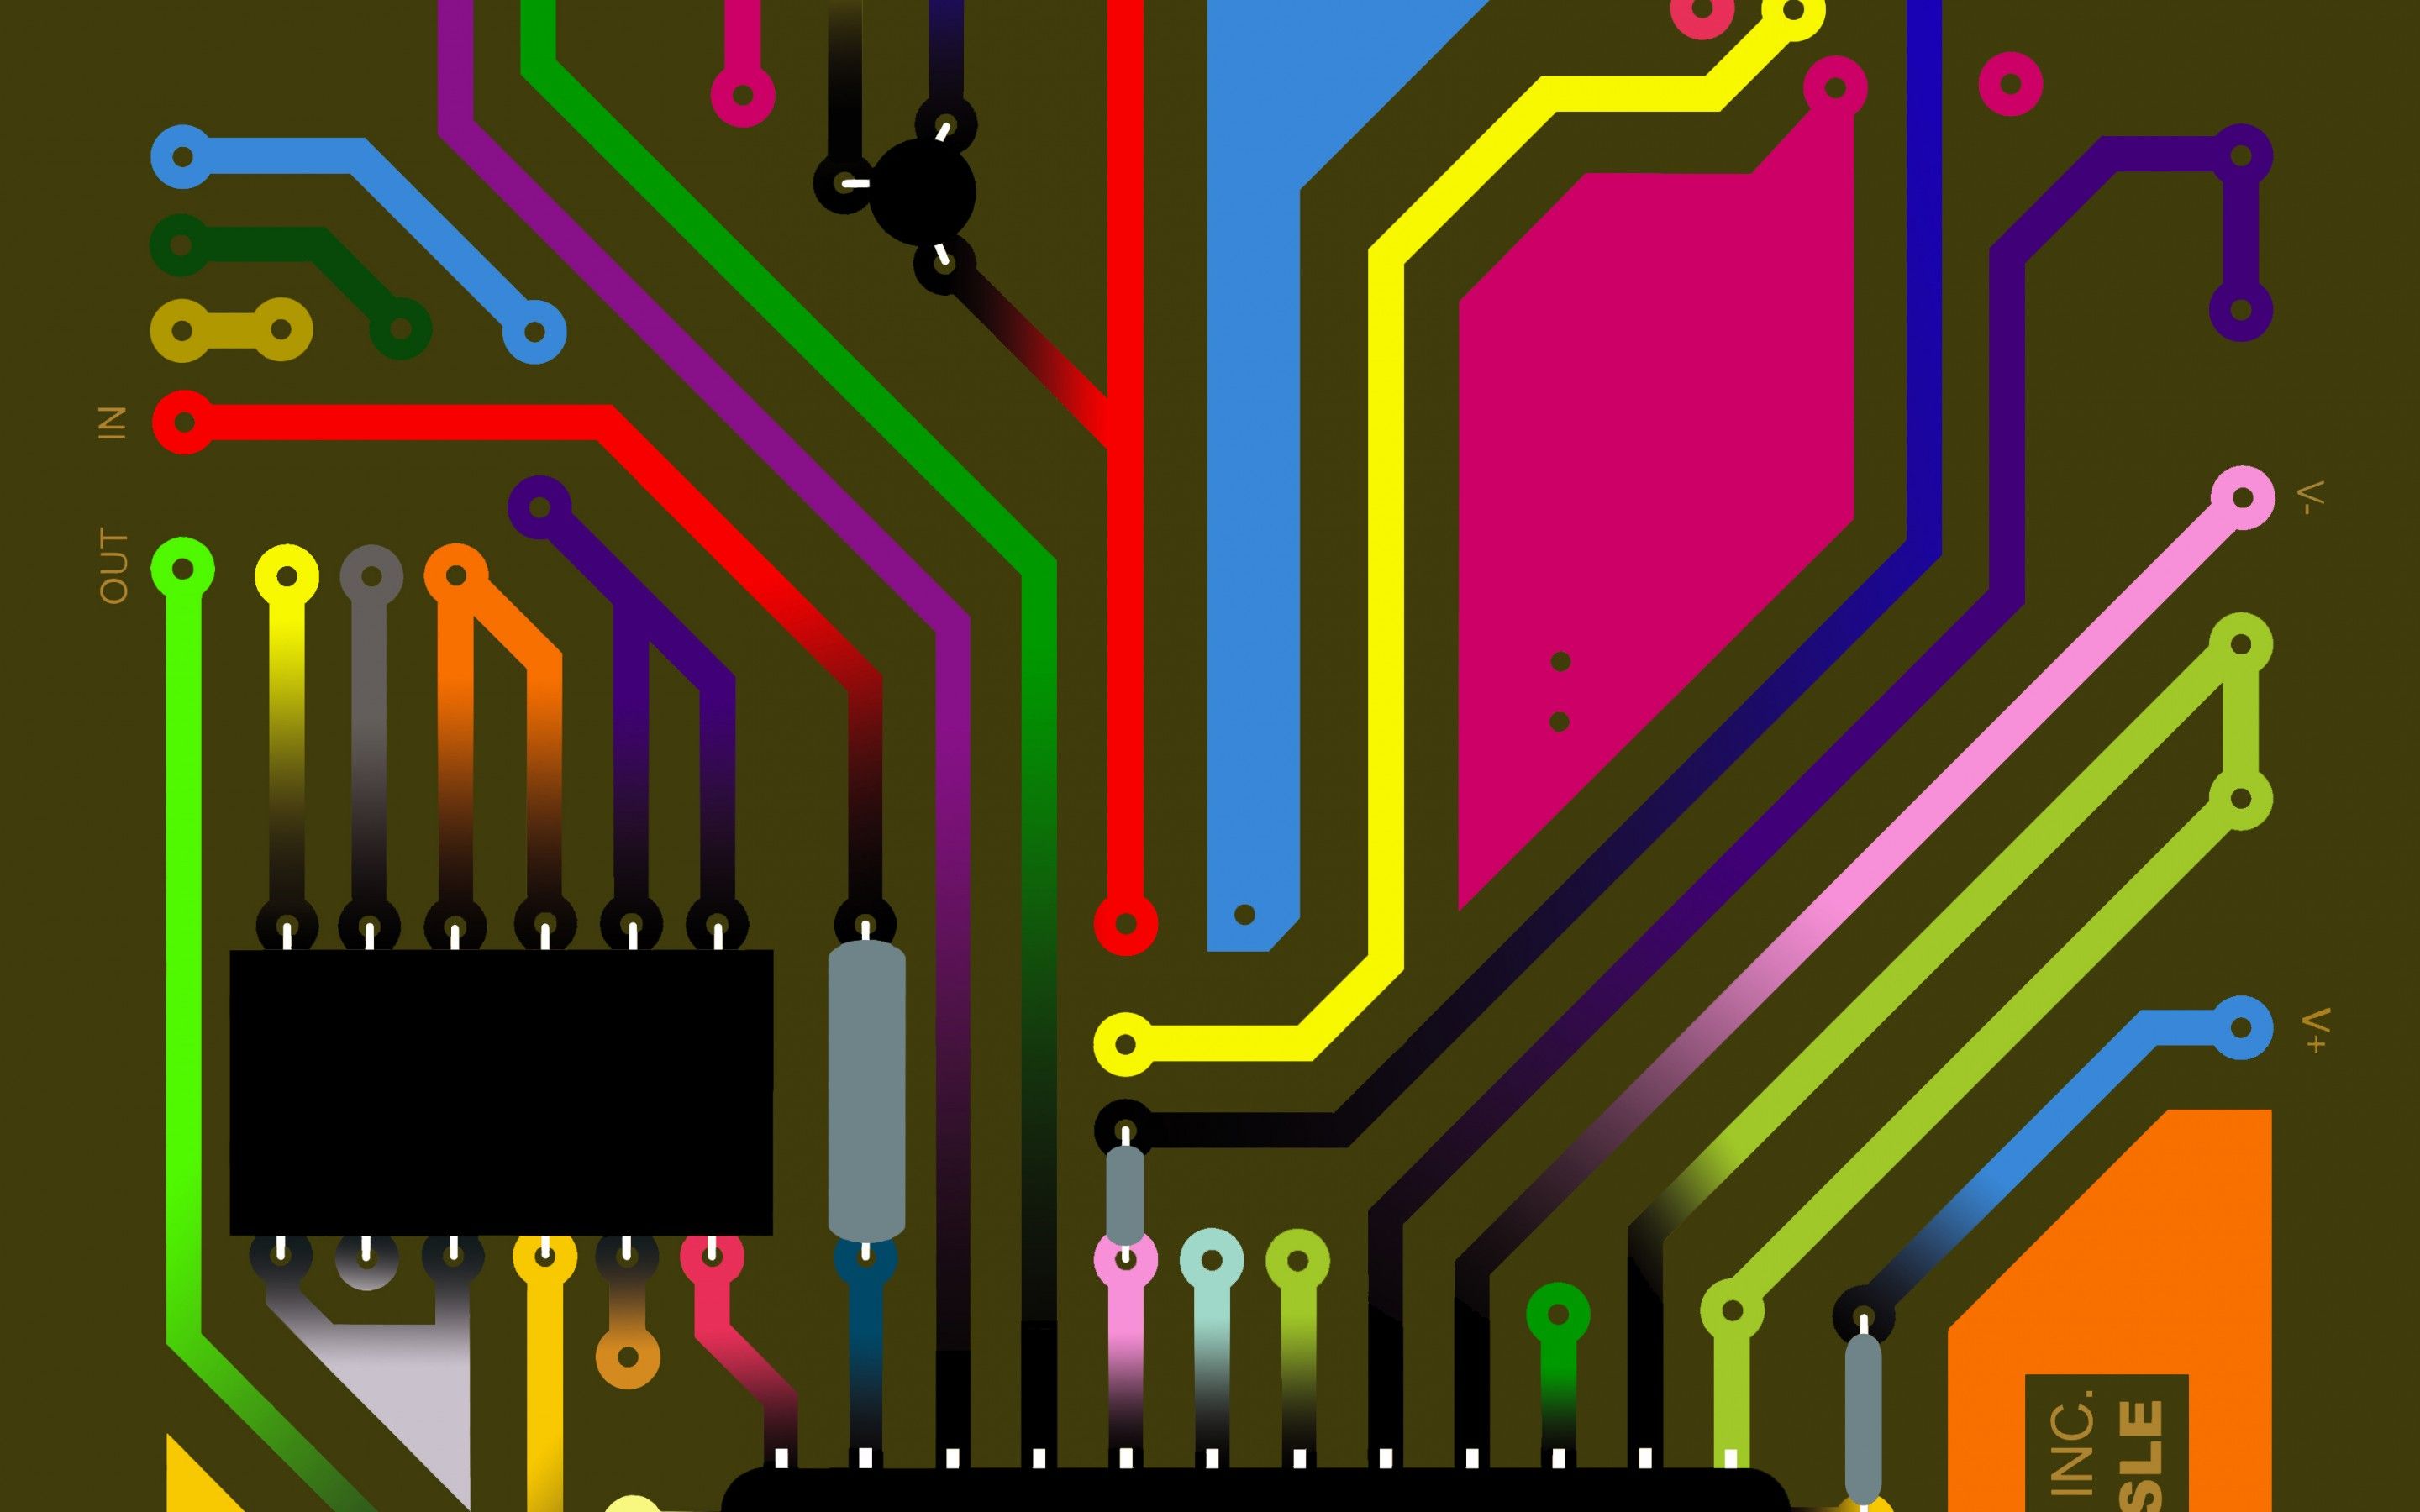 Electronic equipment fee microchip circuits paths wallpaper